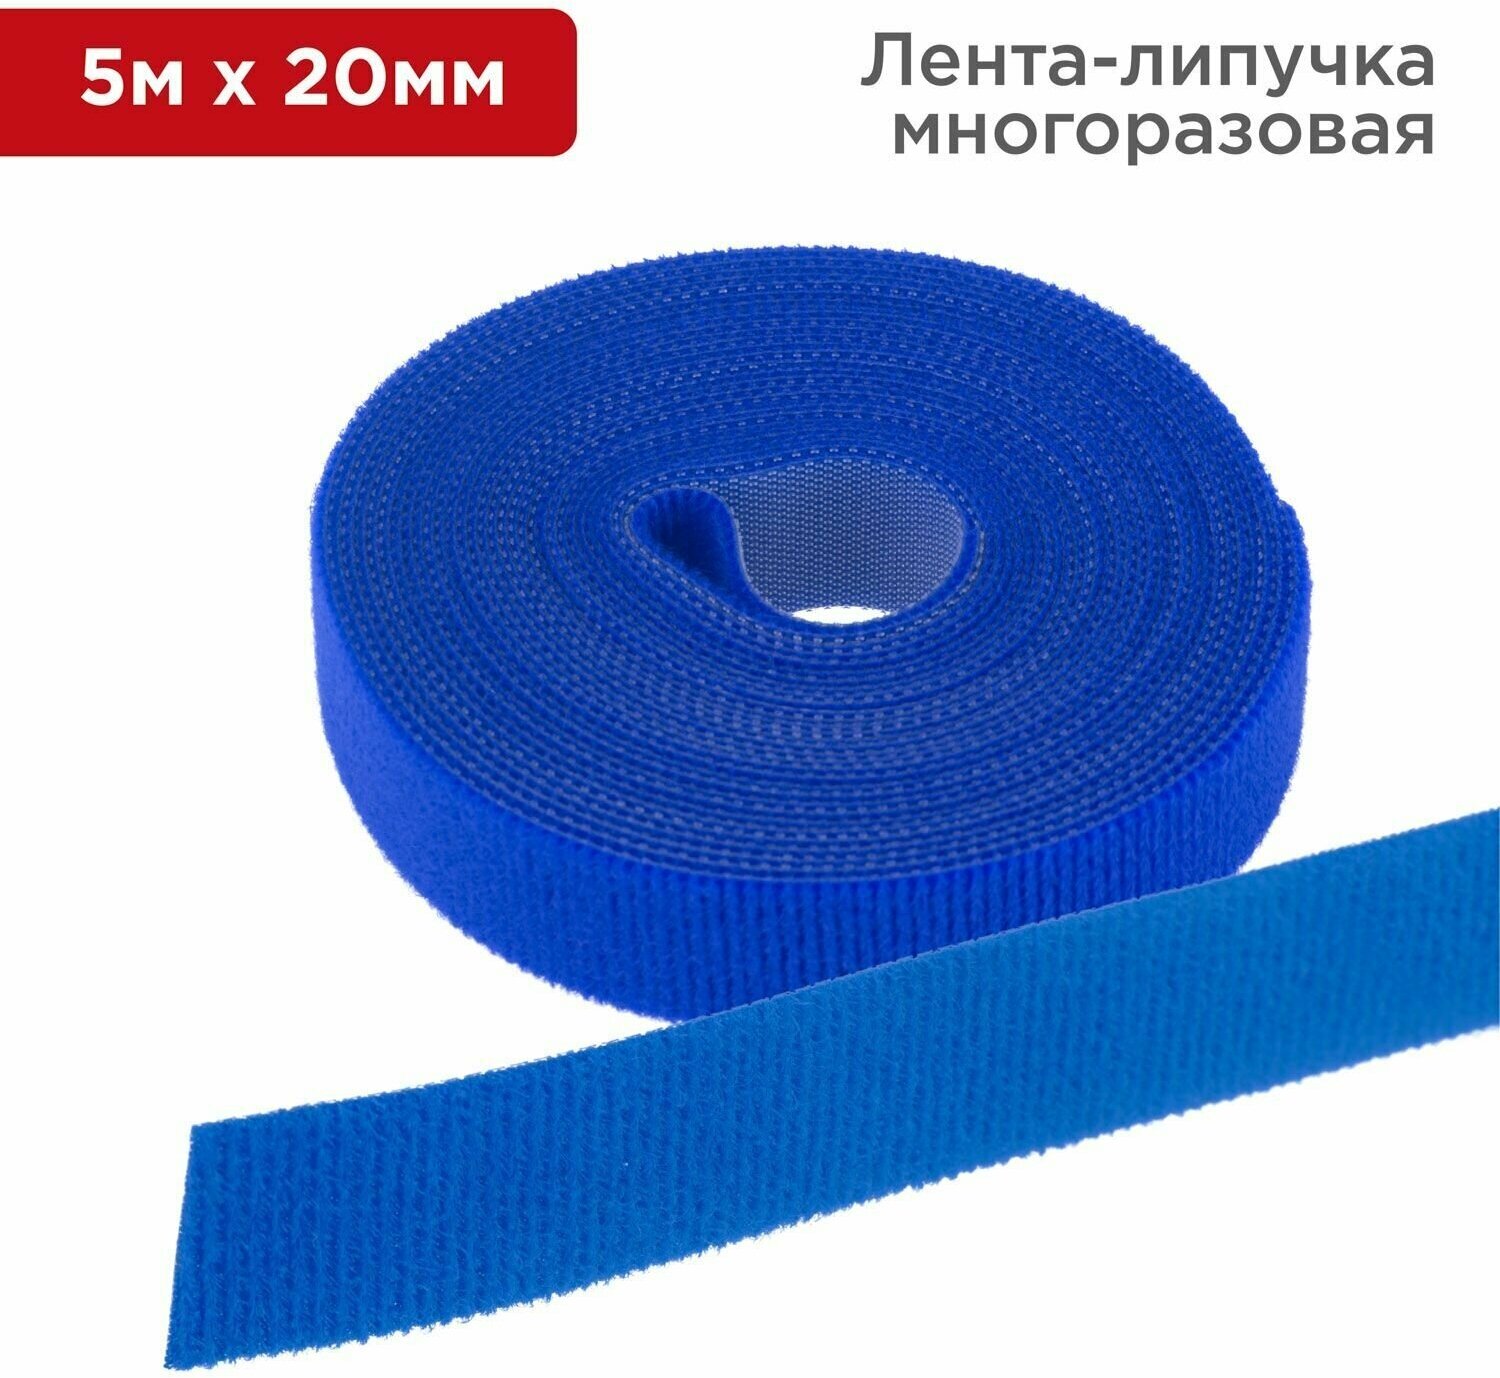 Лента липучка самоклеющаяся многоразовая 5 м х 20 мм для проводов синяя